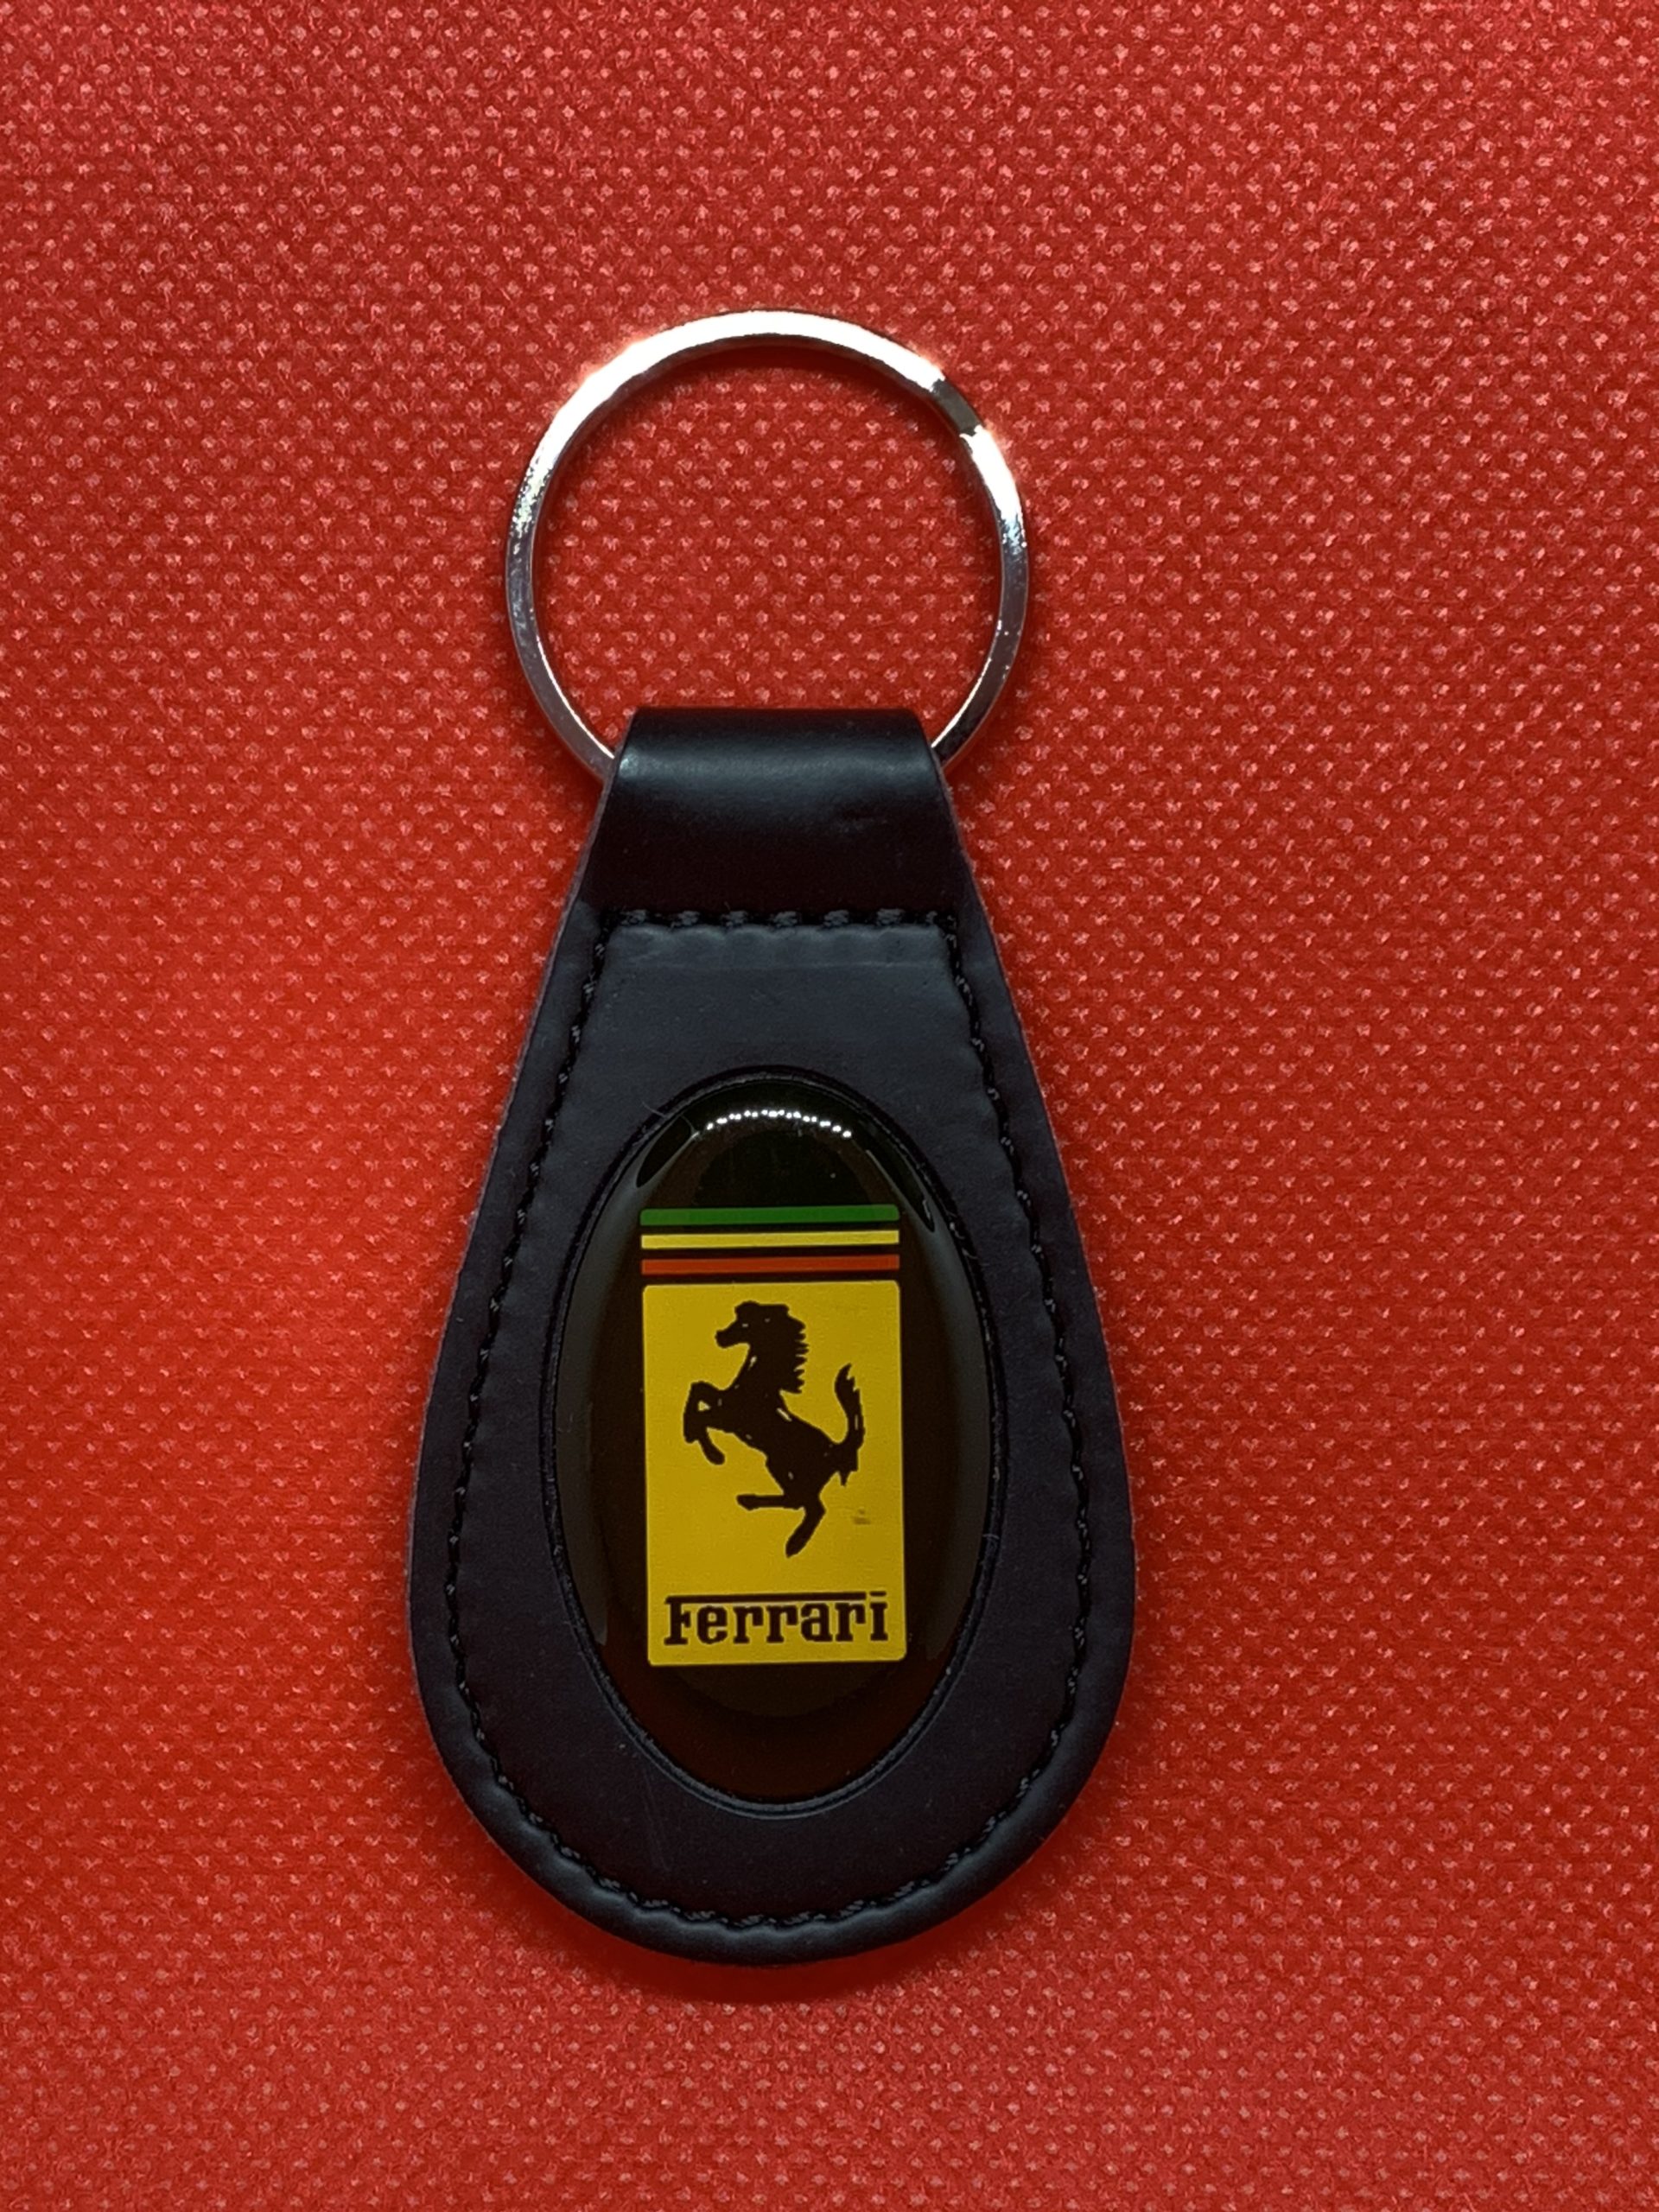 Porte-clefs Ferrari